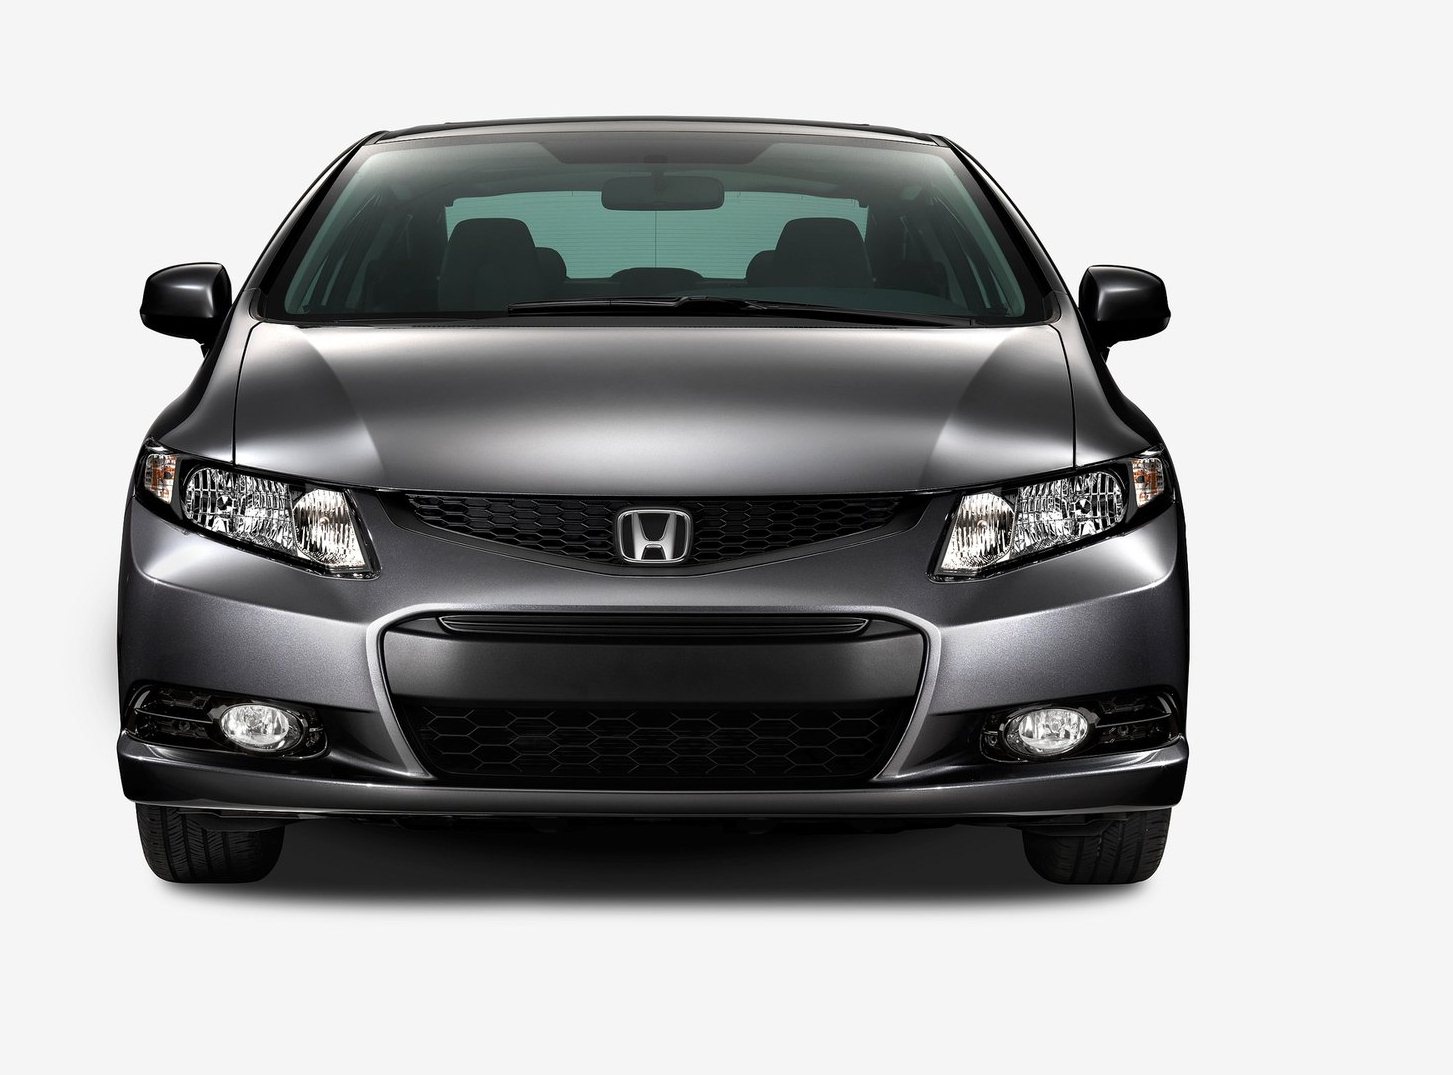 Honda Civic Logo Template photo - 1